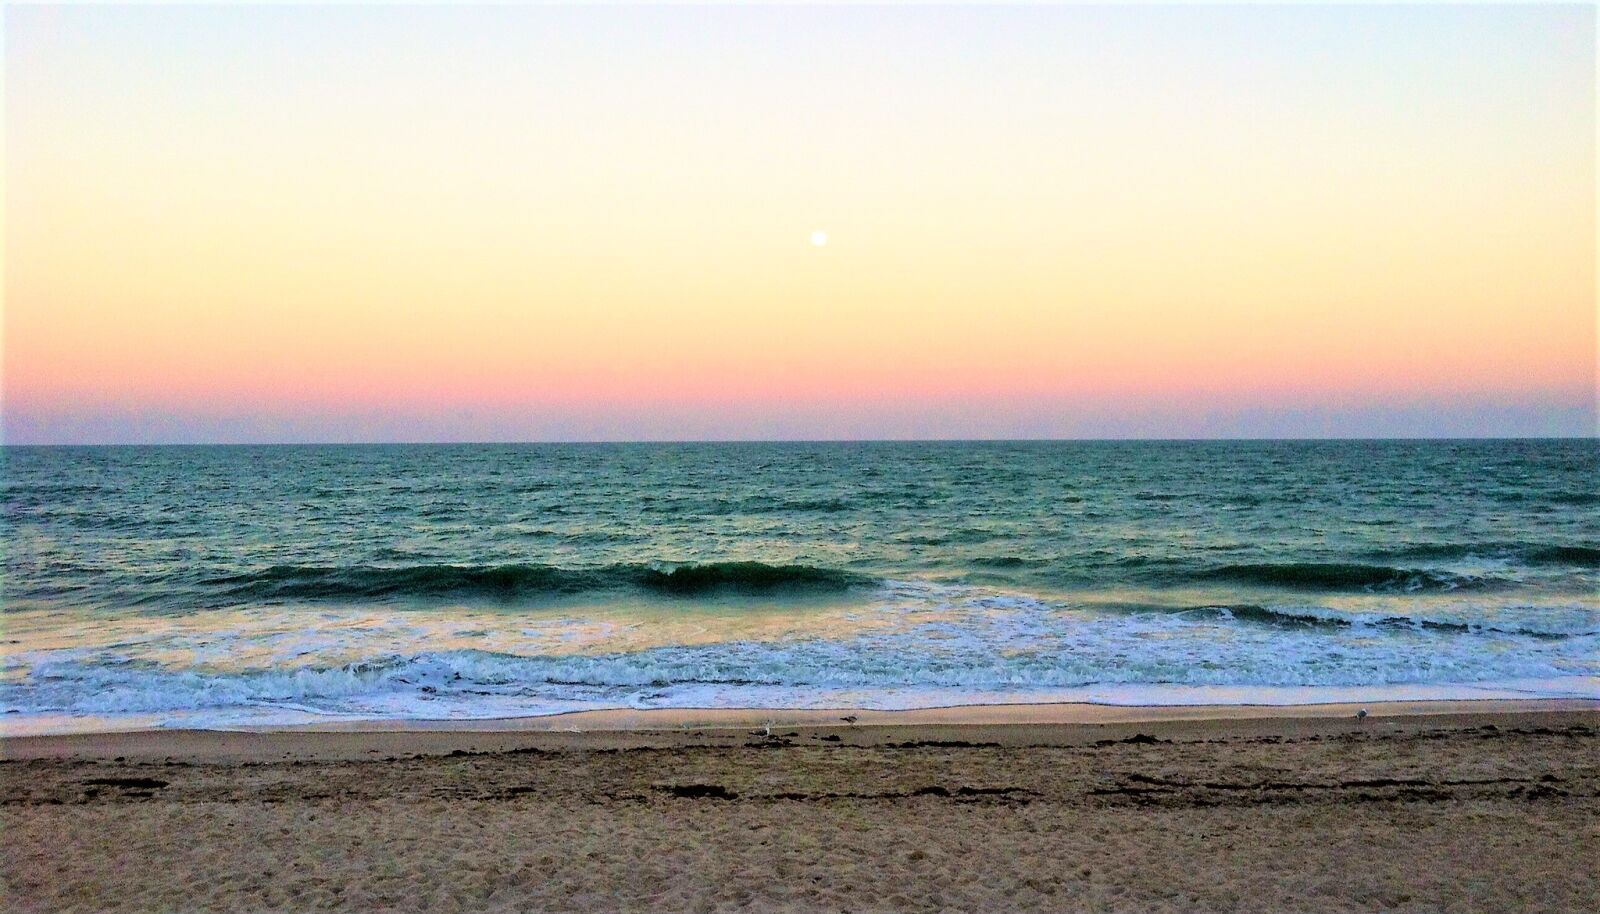 Apple iPhone 4 + iPhone 4 back camera 3.85mm f/2.8 sample photo. Evening waves, beach sunset photography